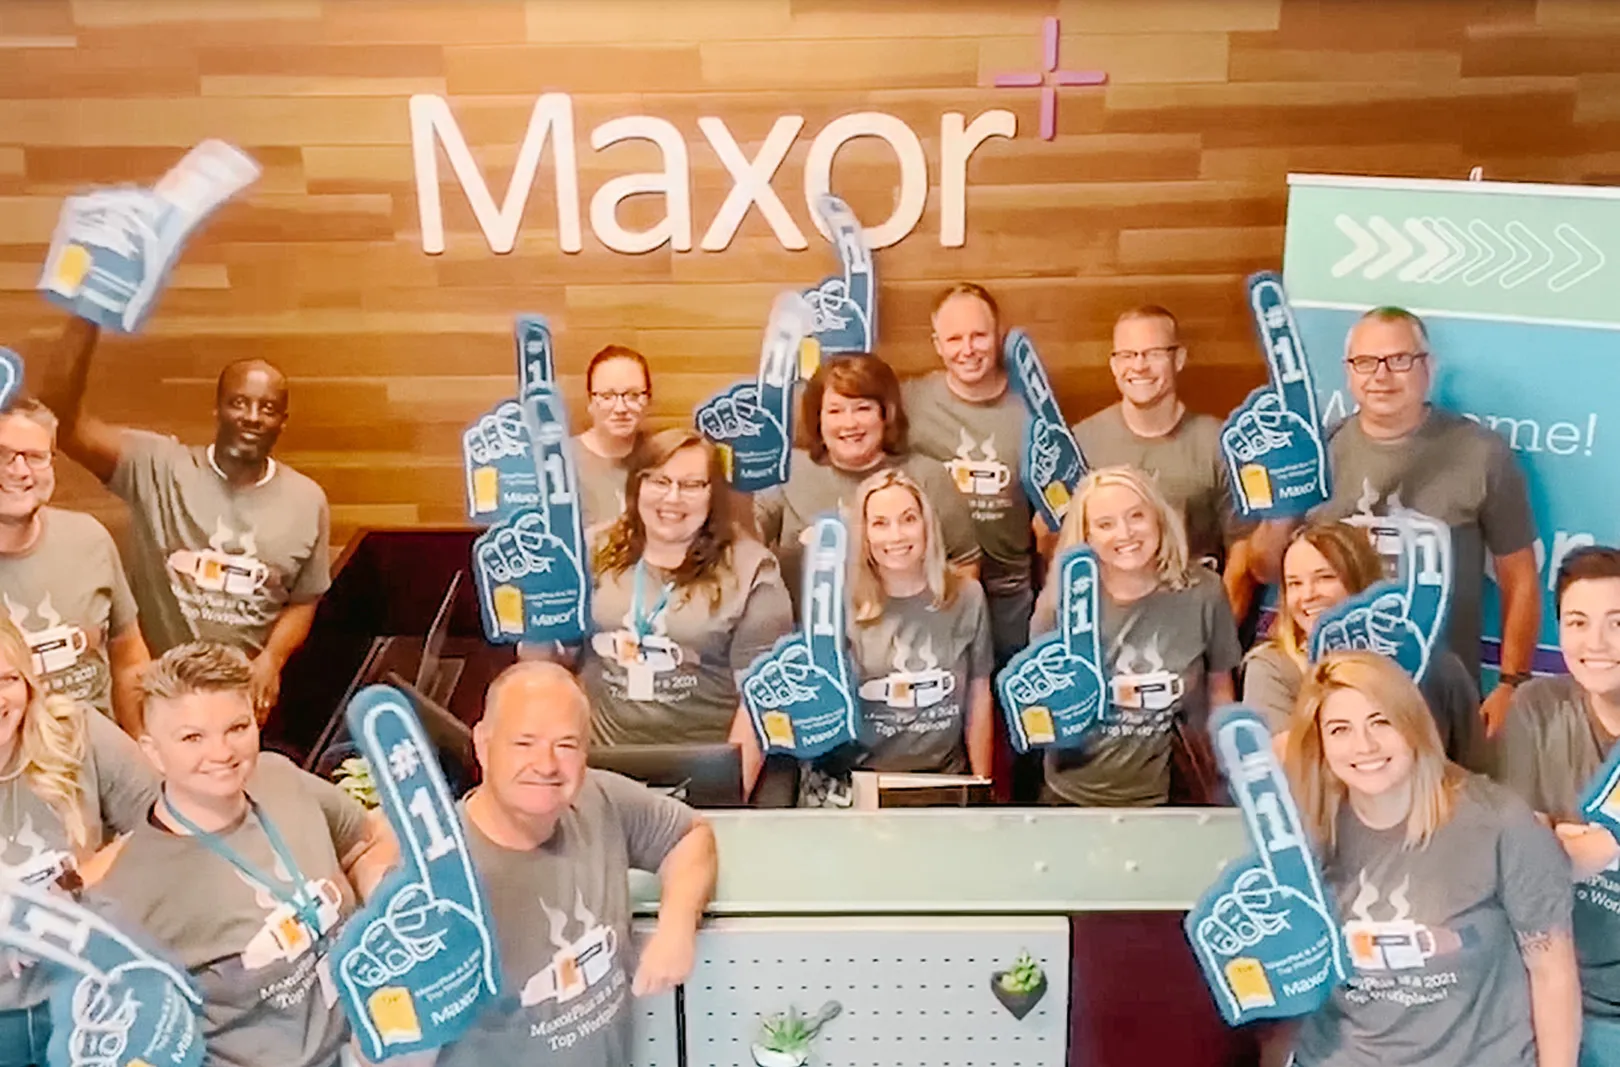 Maxor team celebrating in front of Maxor interior sign.